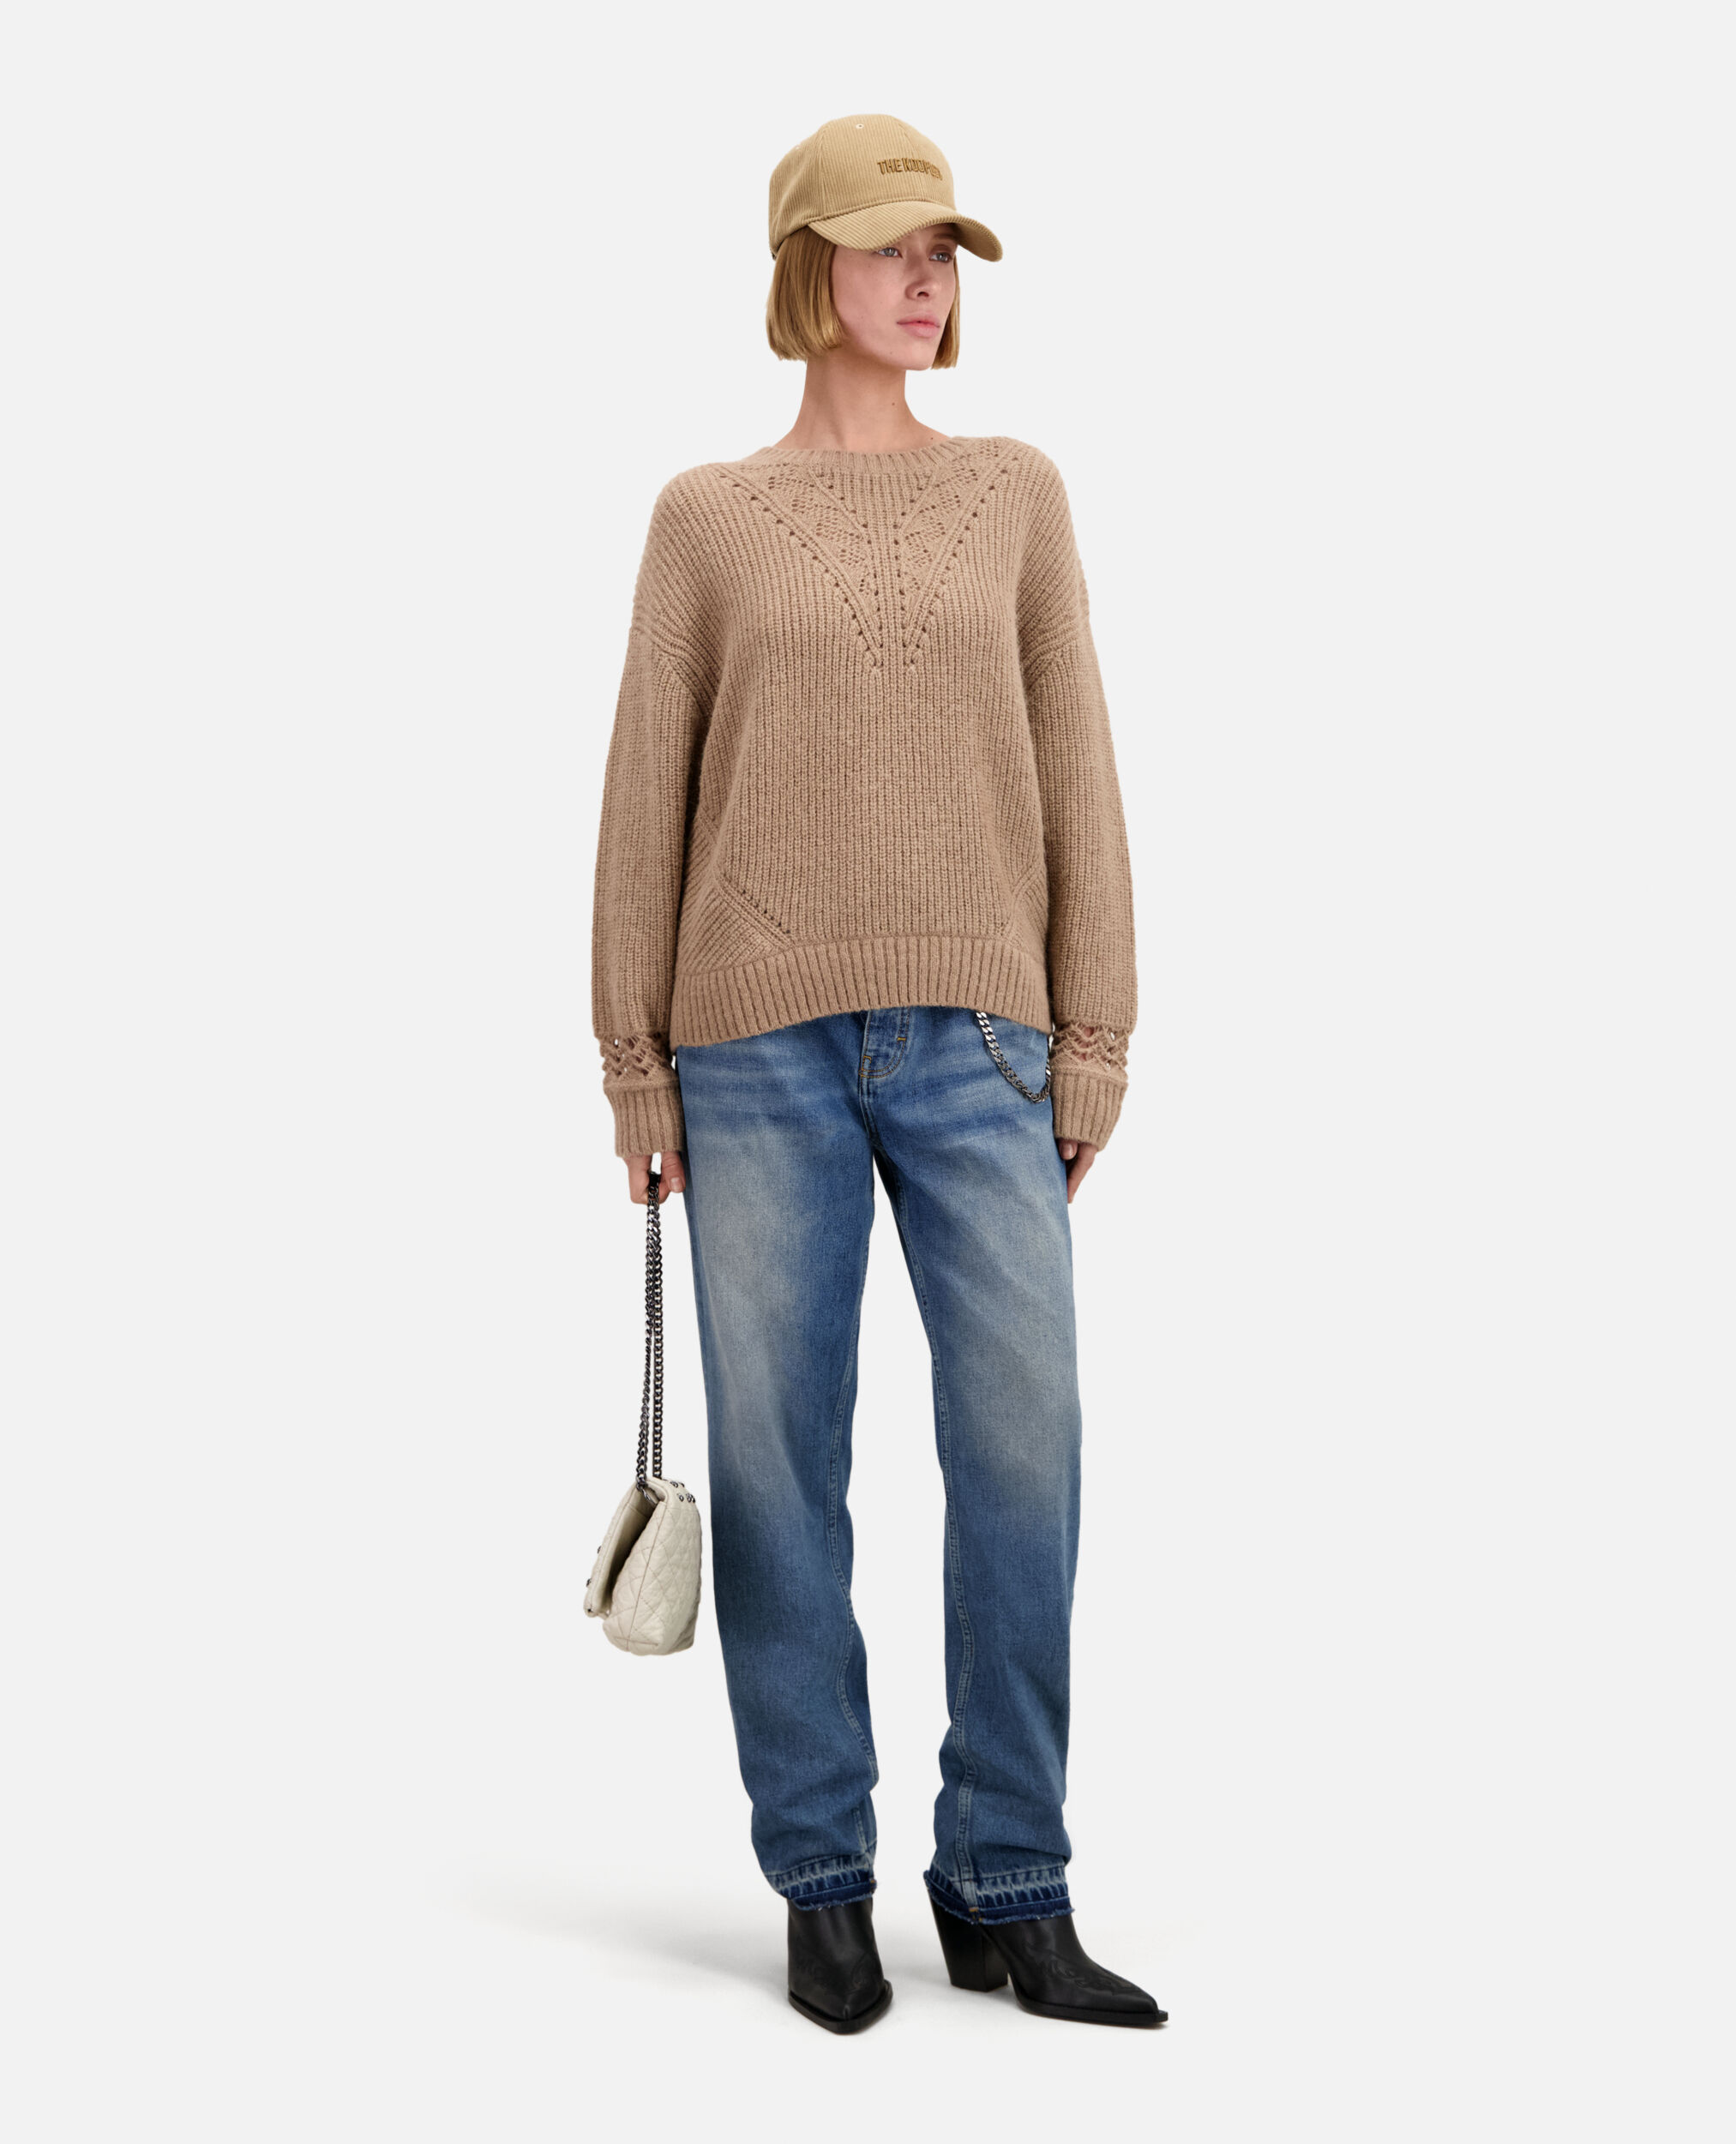 Camel wool-blend sweater, BROWN-BEIGE, hi-res image number null